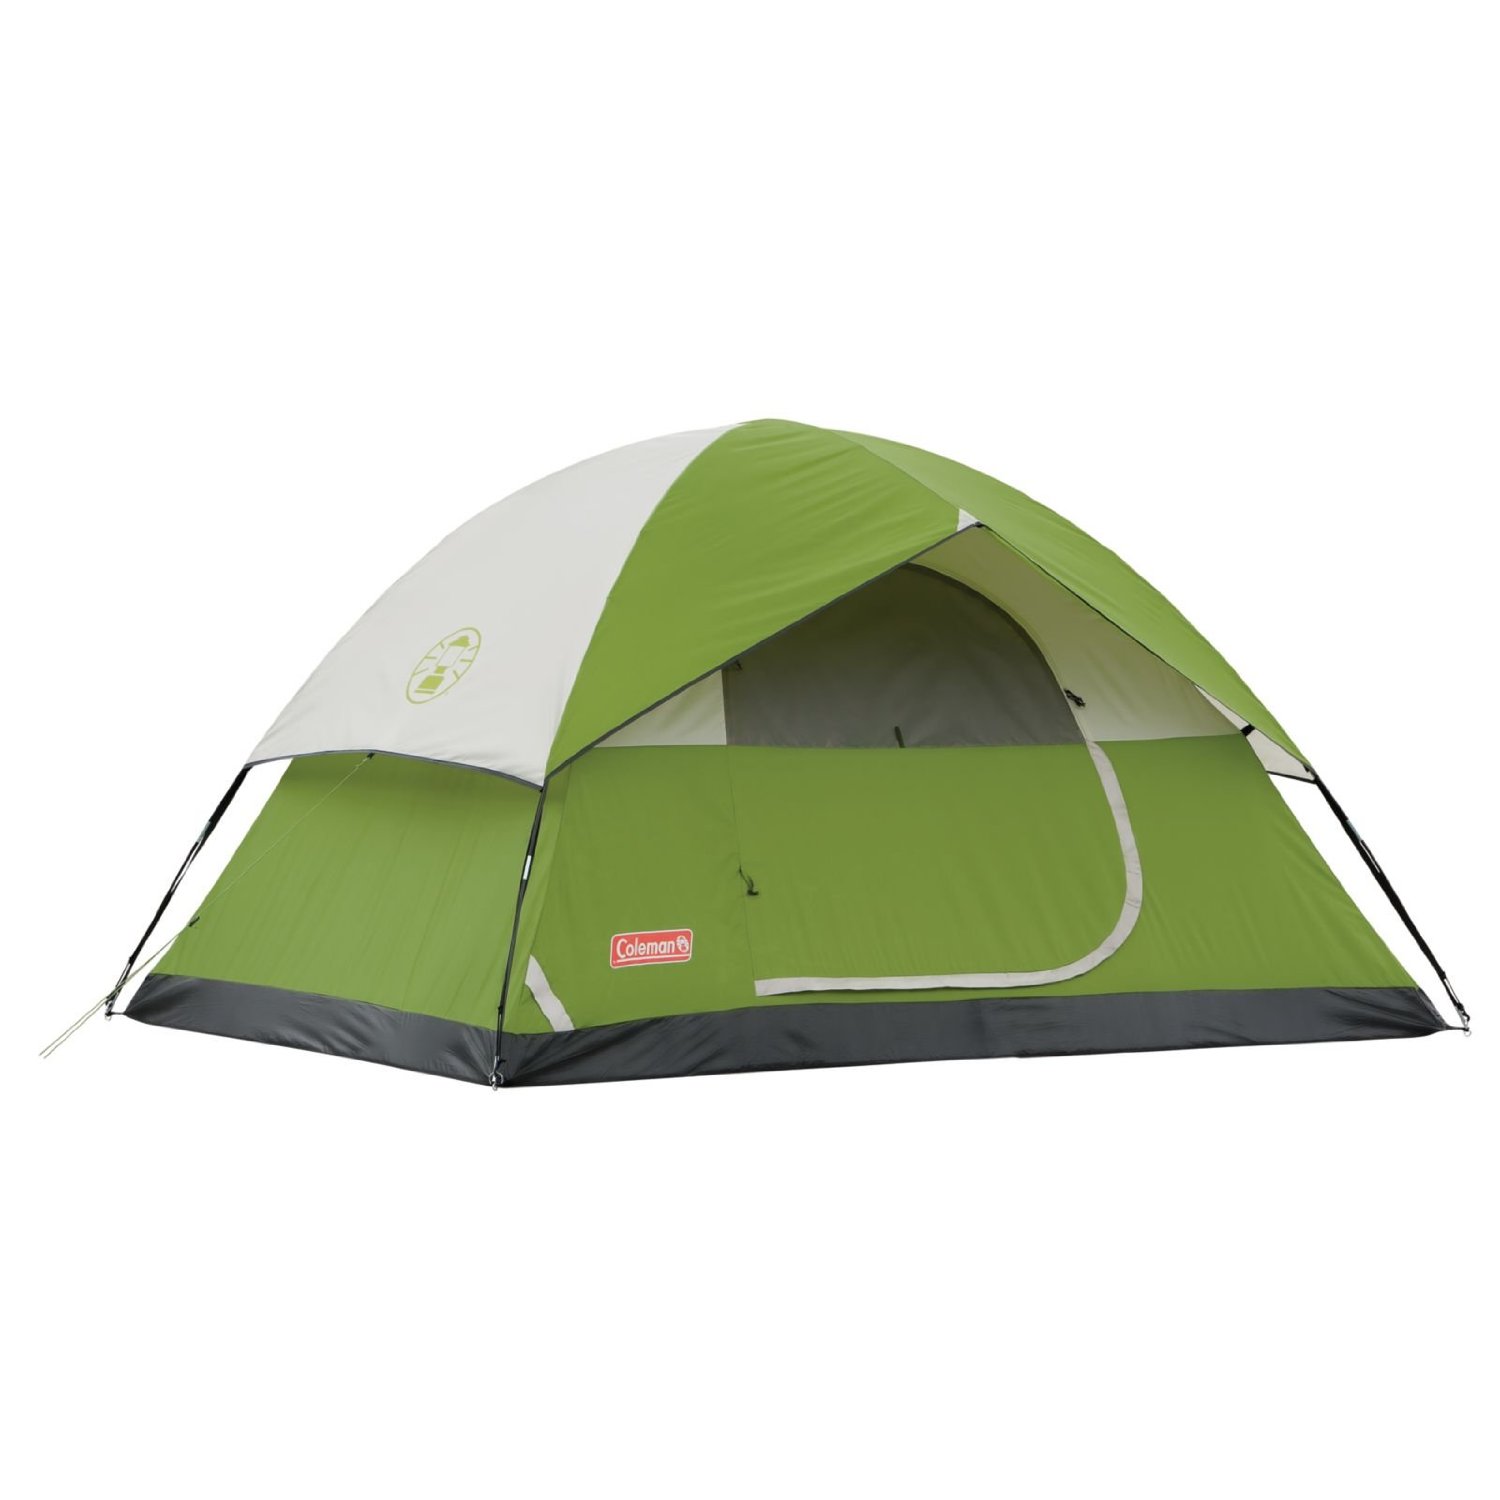 Coleman Sundome 4 Person Tent – Just $37.98!